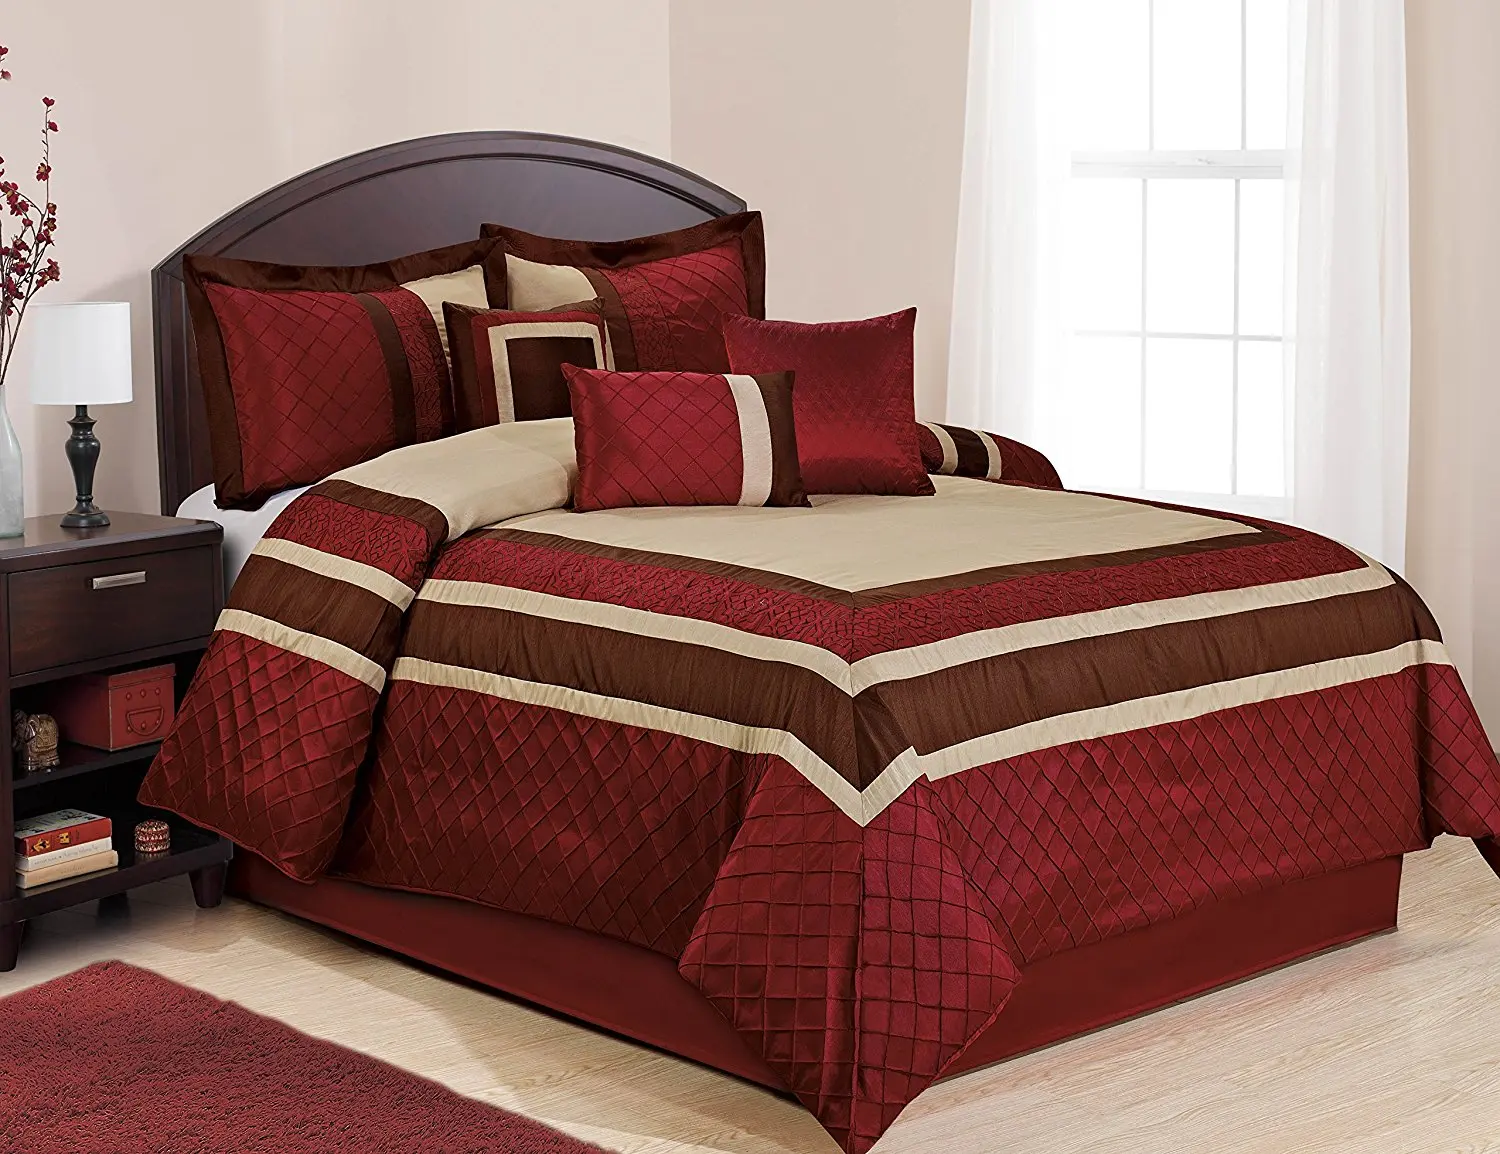 red cal king comforter sets.